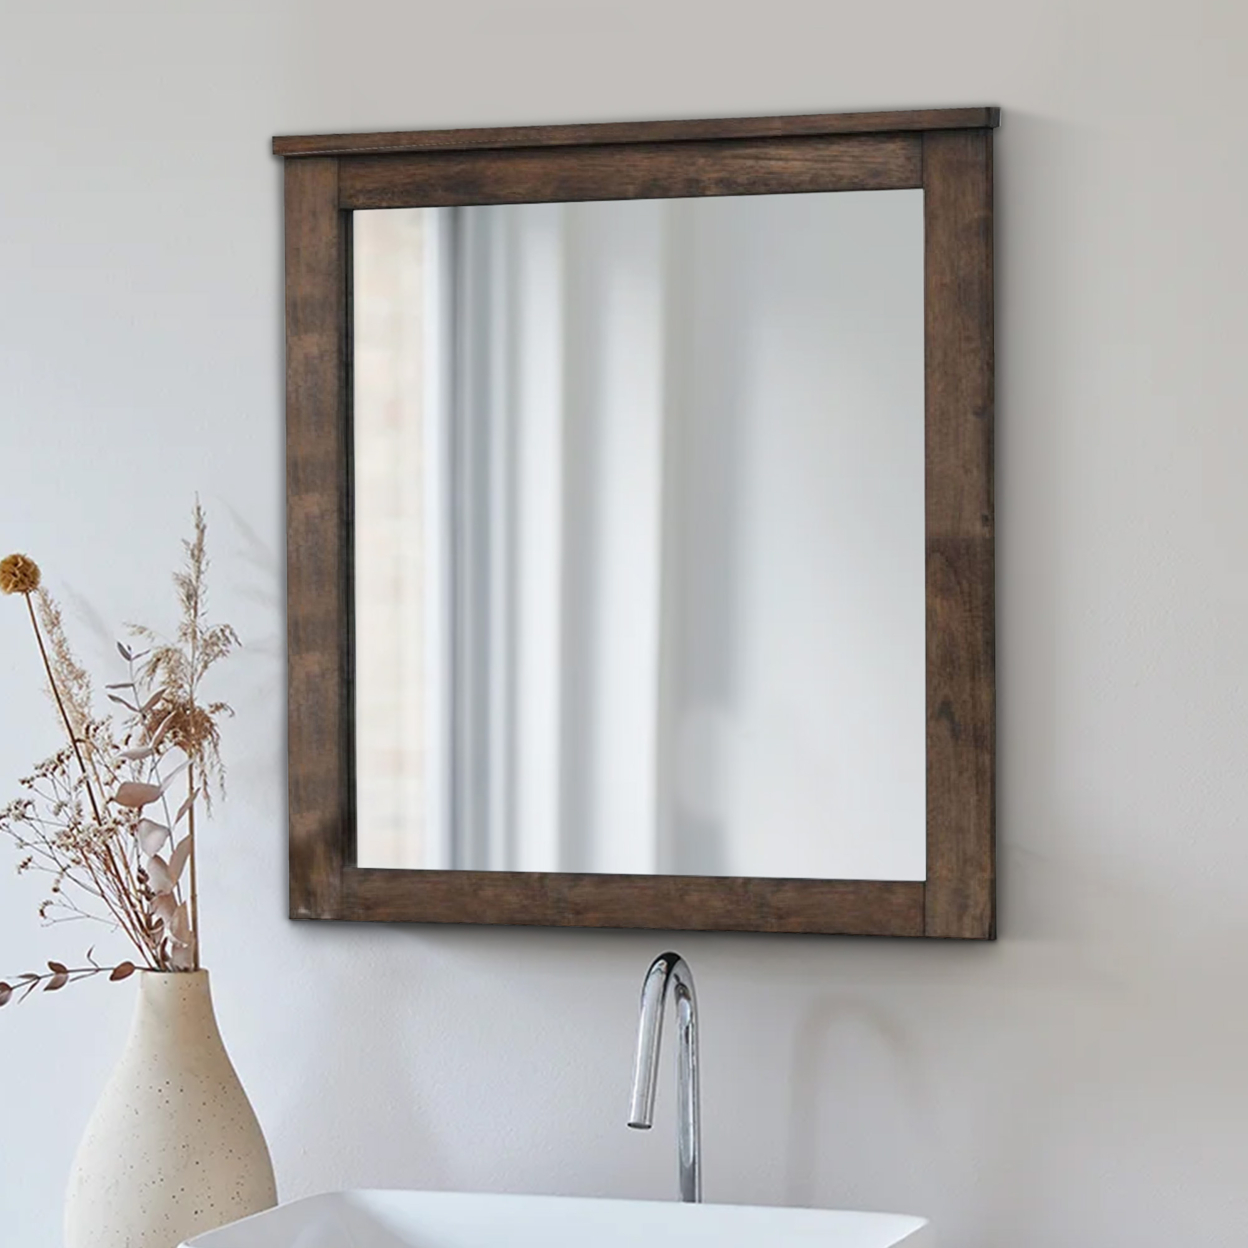 41 Inch Wood Portrait Mirror, Beveled Trim Top, Wood Grain, Oak Brown- Saltoro Sherpi